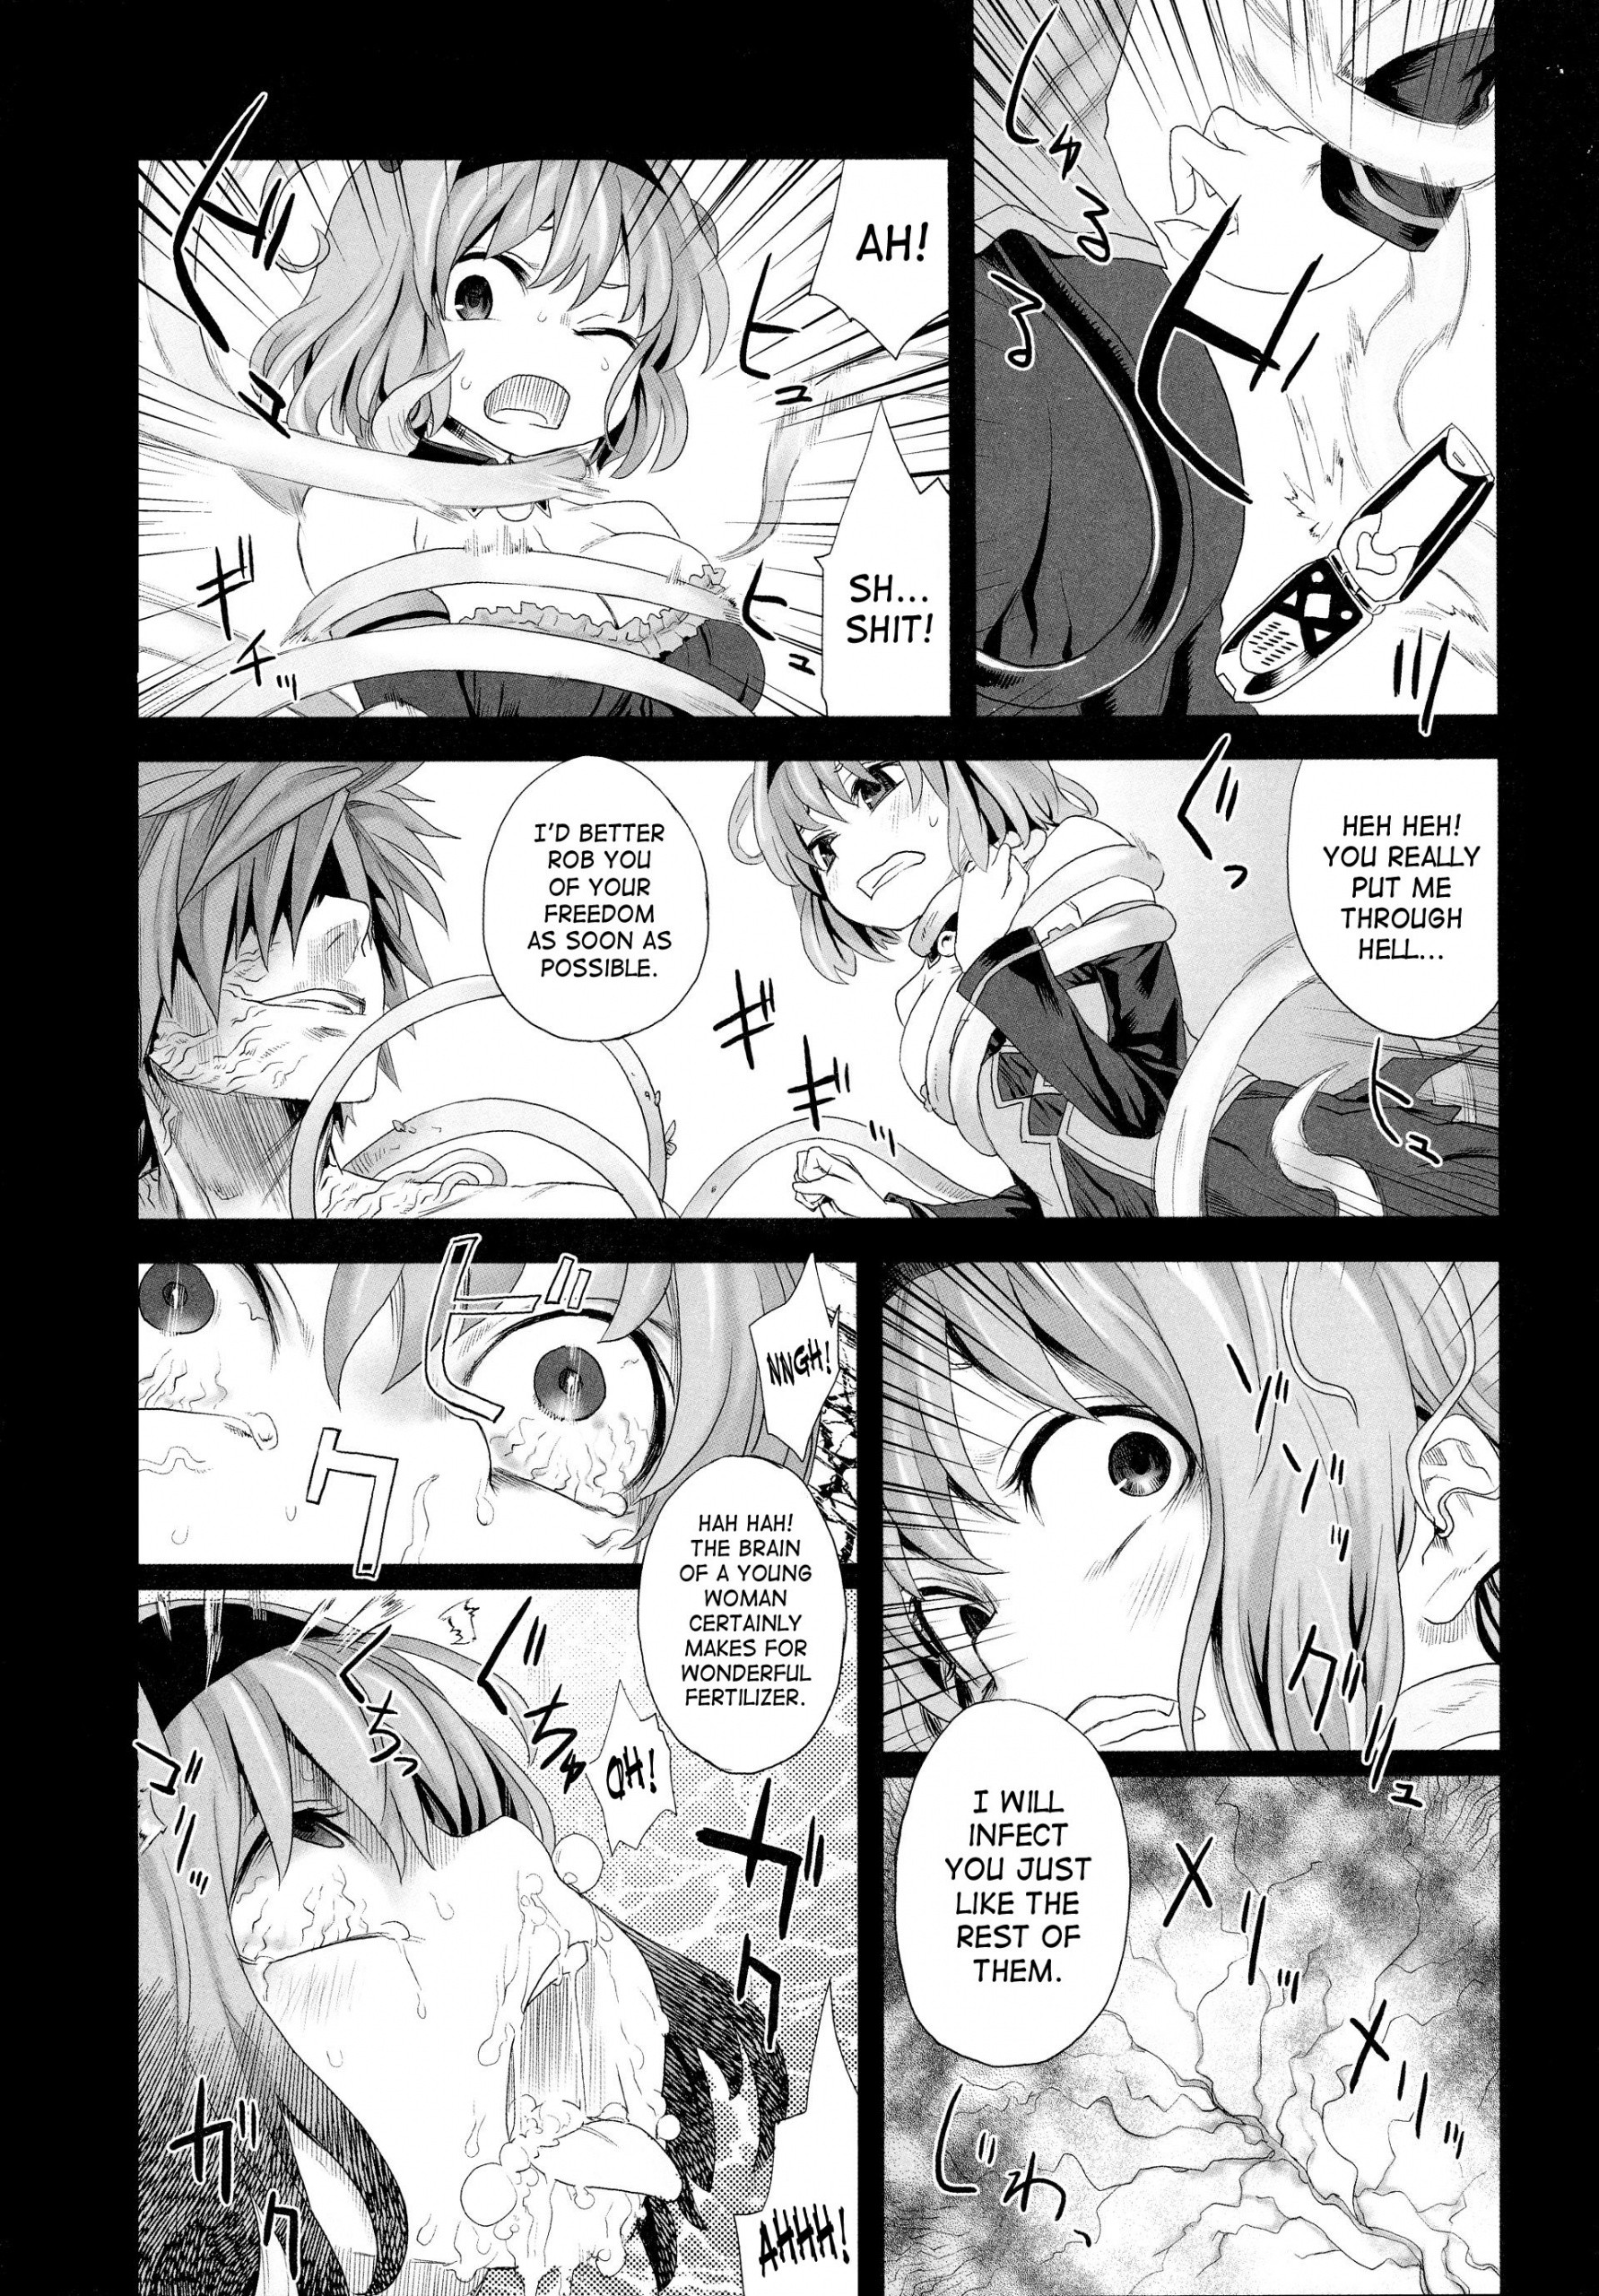 Victim Girls 8 - Venus Trap hentai manga picture 6